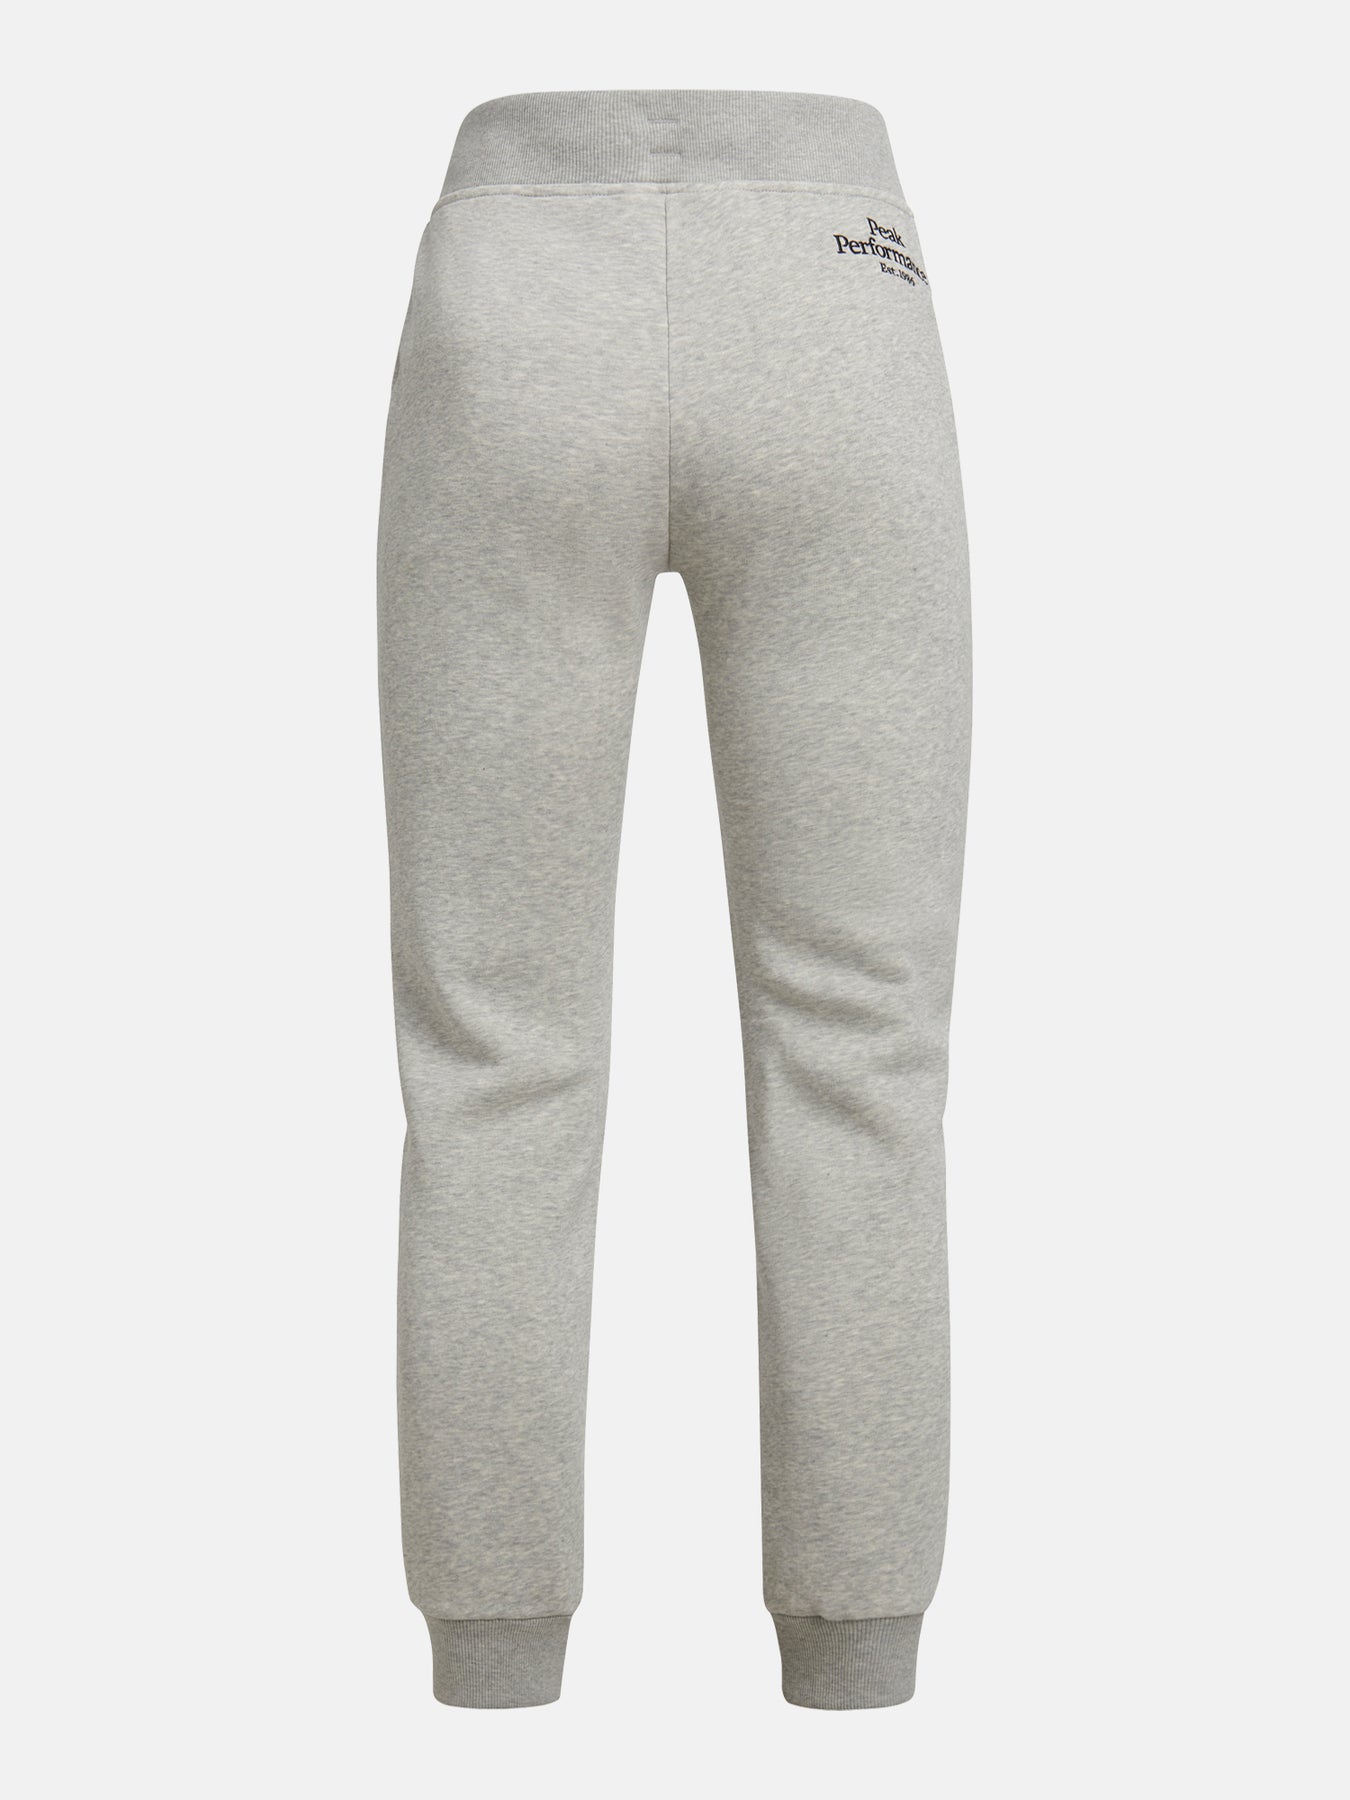 W Original Pants - Grey Melange